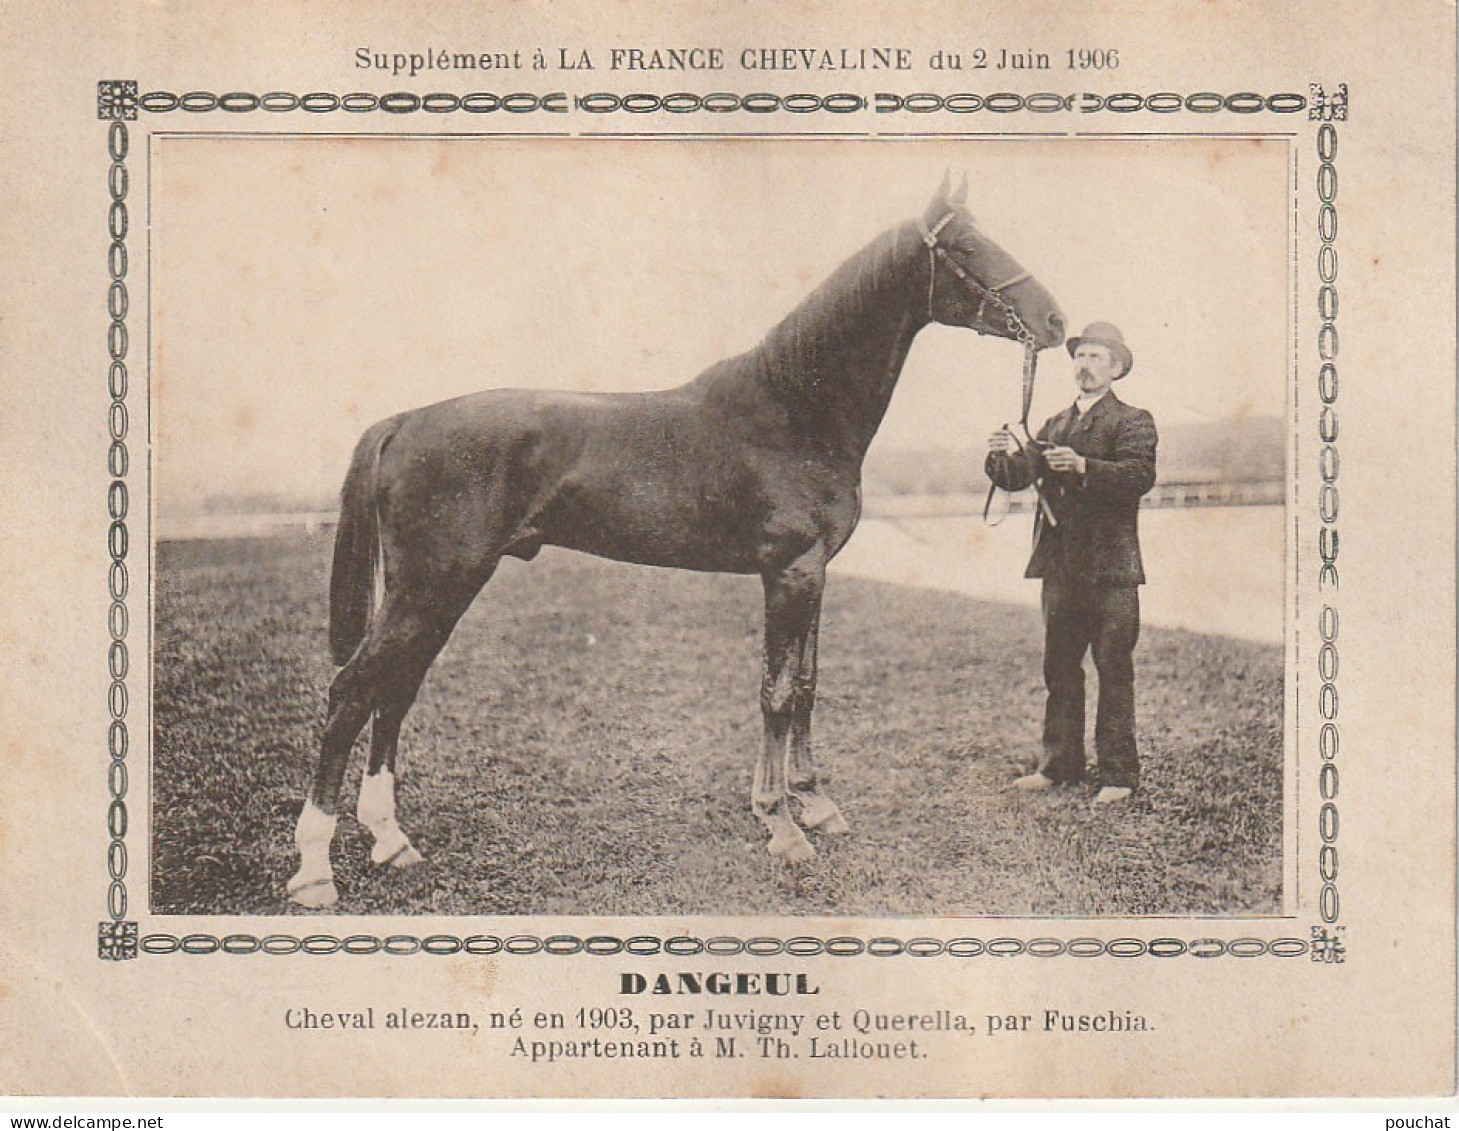 AA+ - " DANGEUL " - CHEVAL ALEZAN APPARTENANT A M. TH. LALLOUET - SUPPL. FRANCE CHEVALINE JUIN 1906 - Hípica